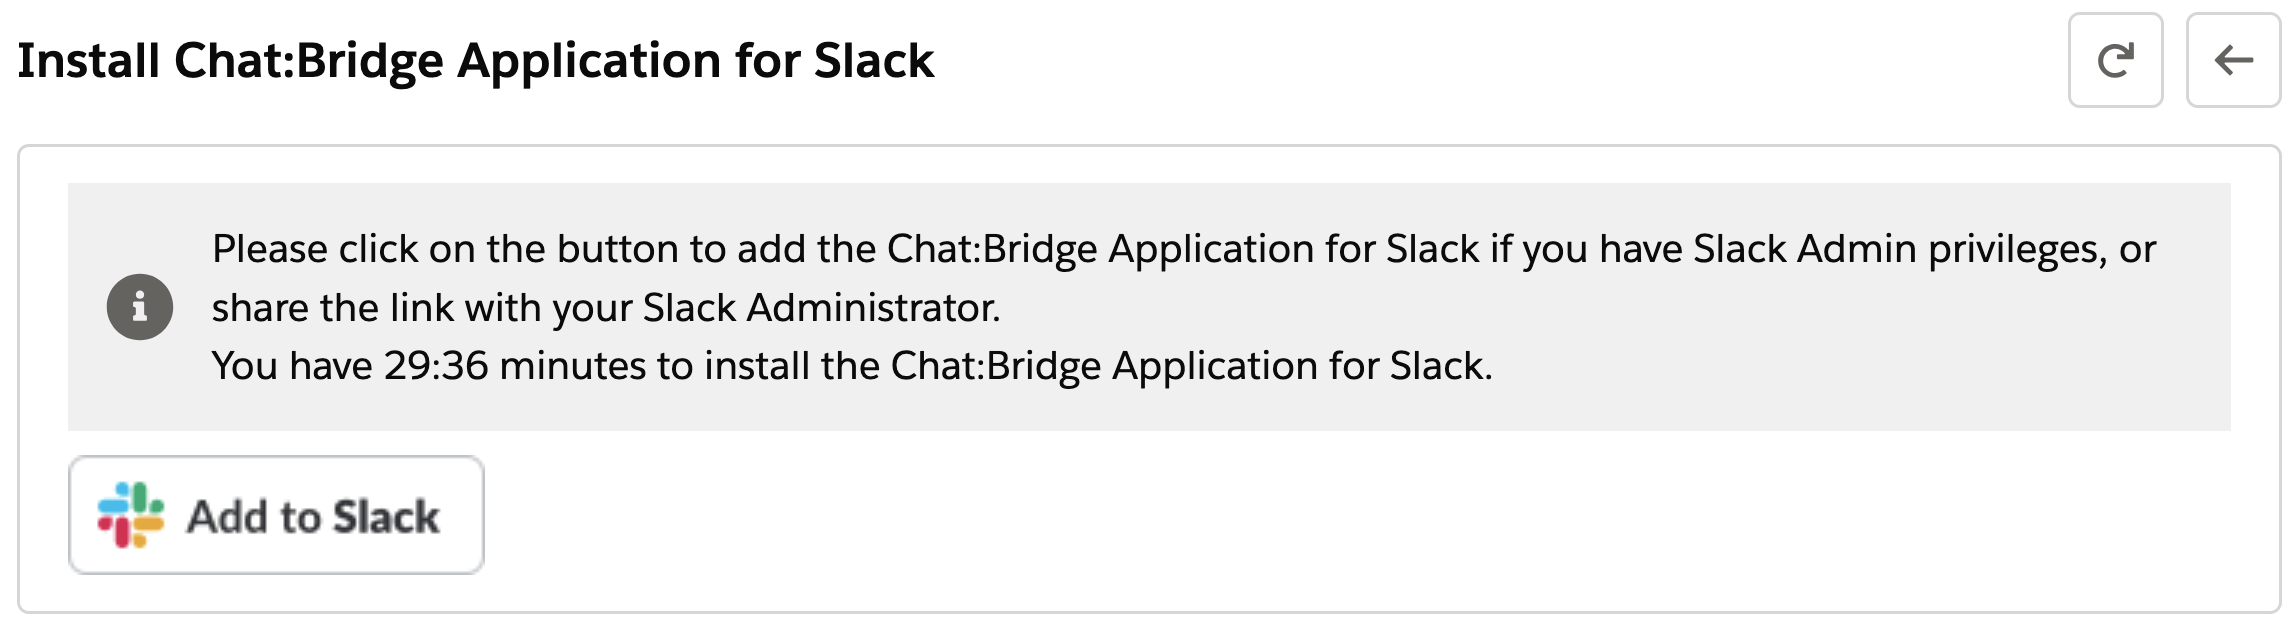 install application for Slack - 2.png